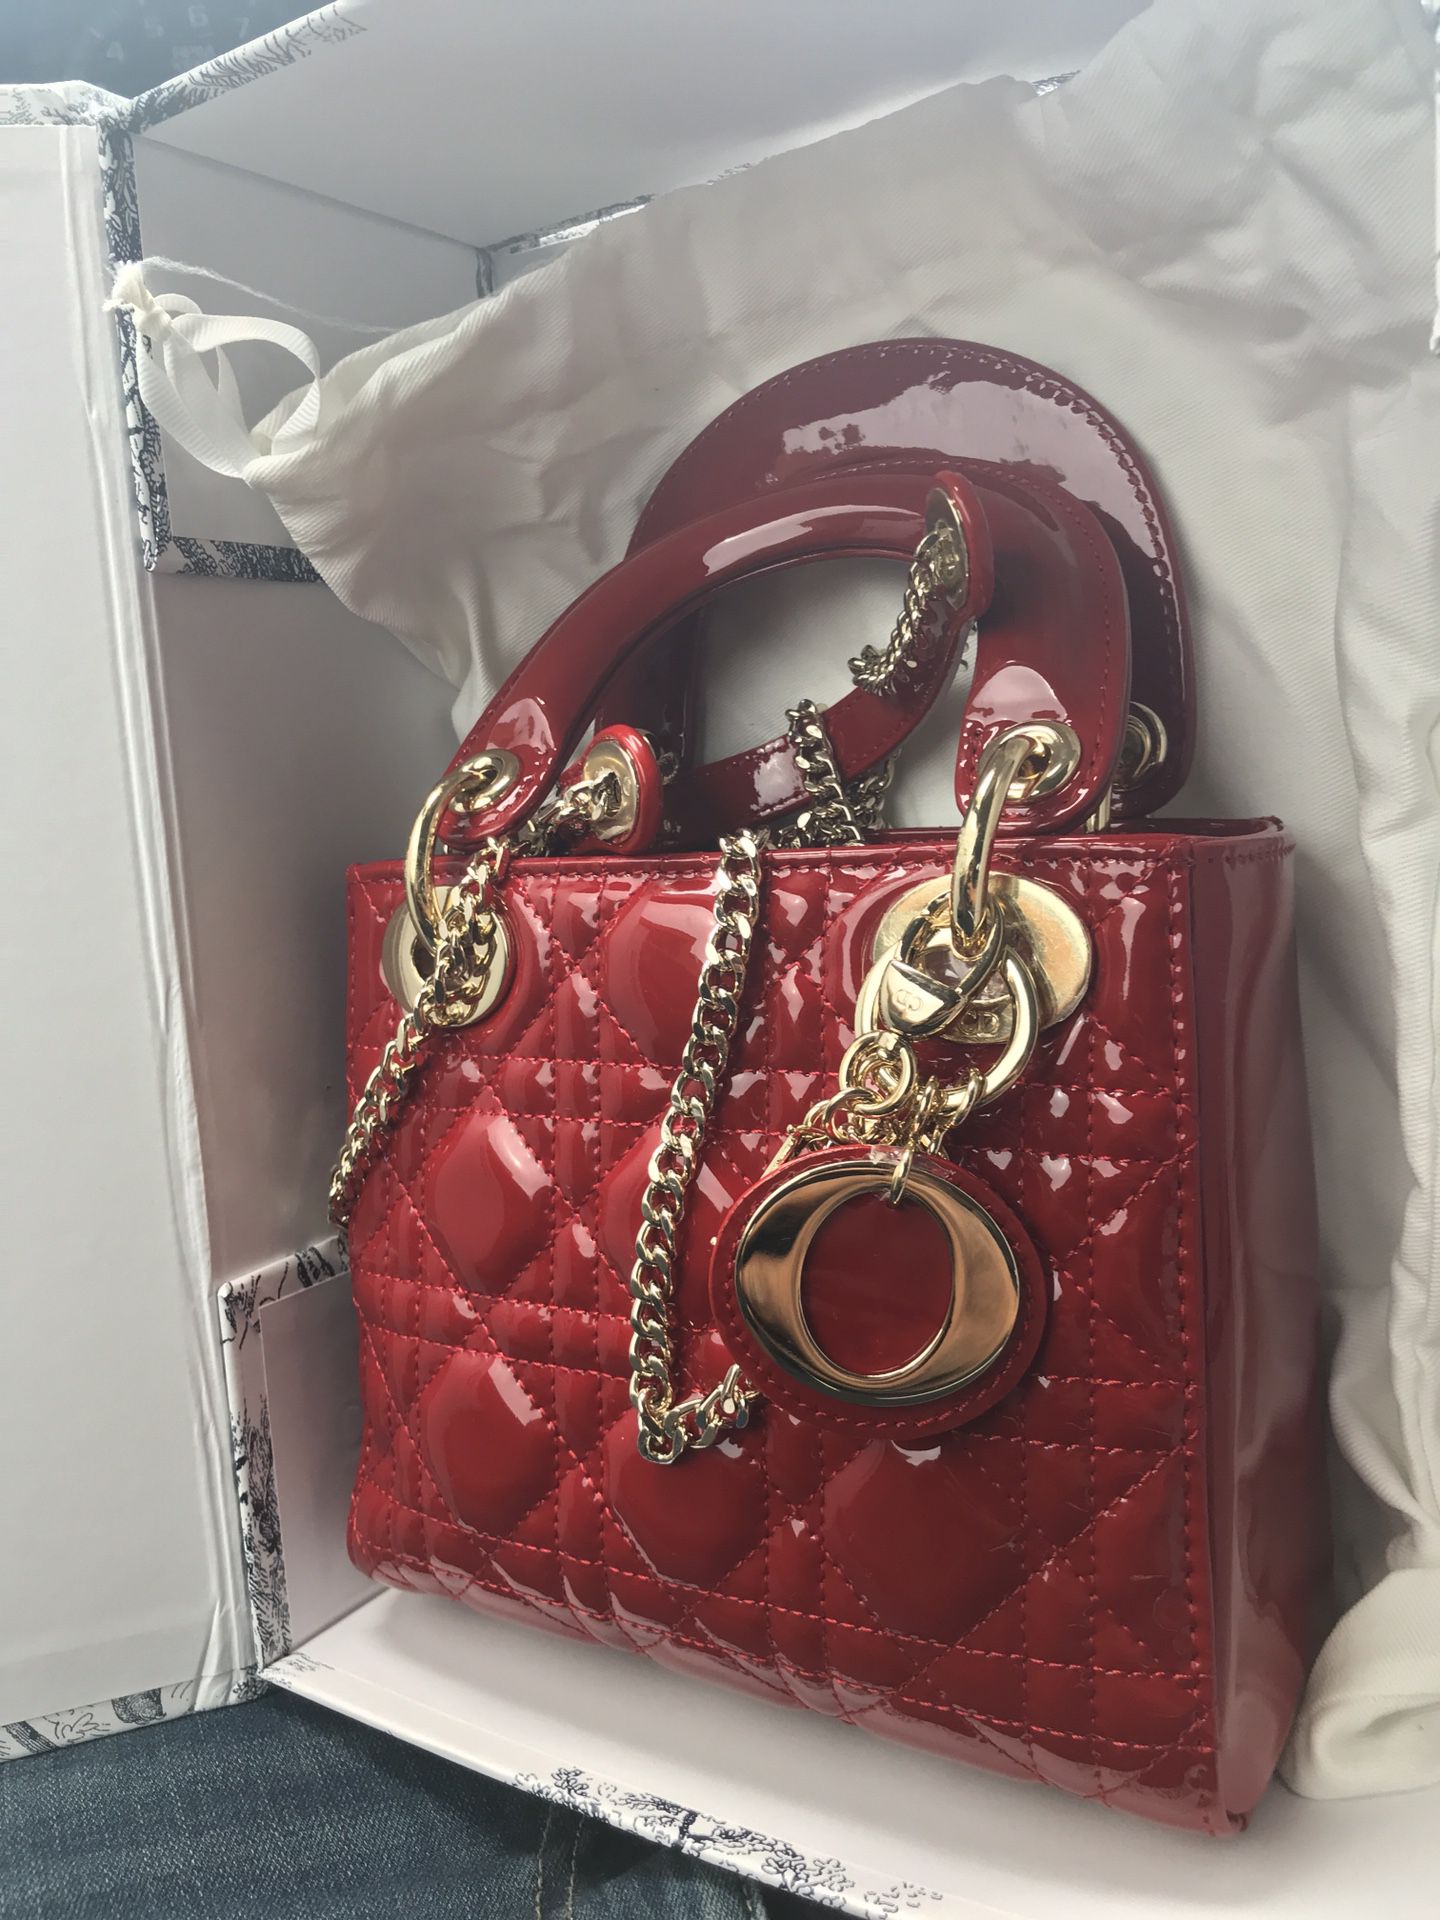 Authentic Dior purse